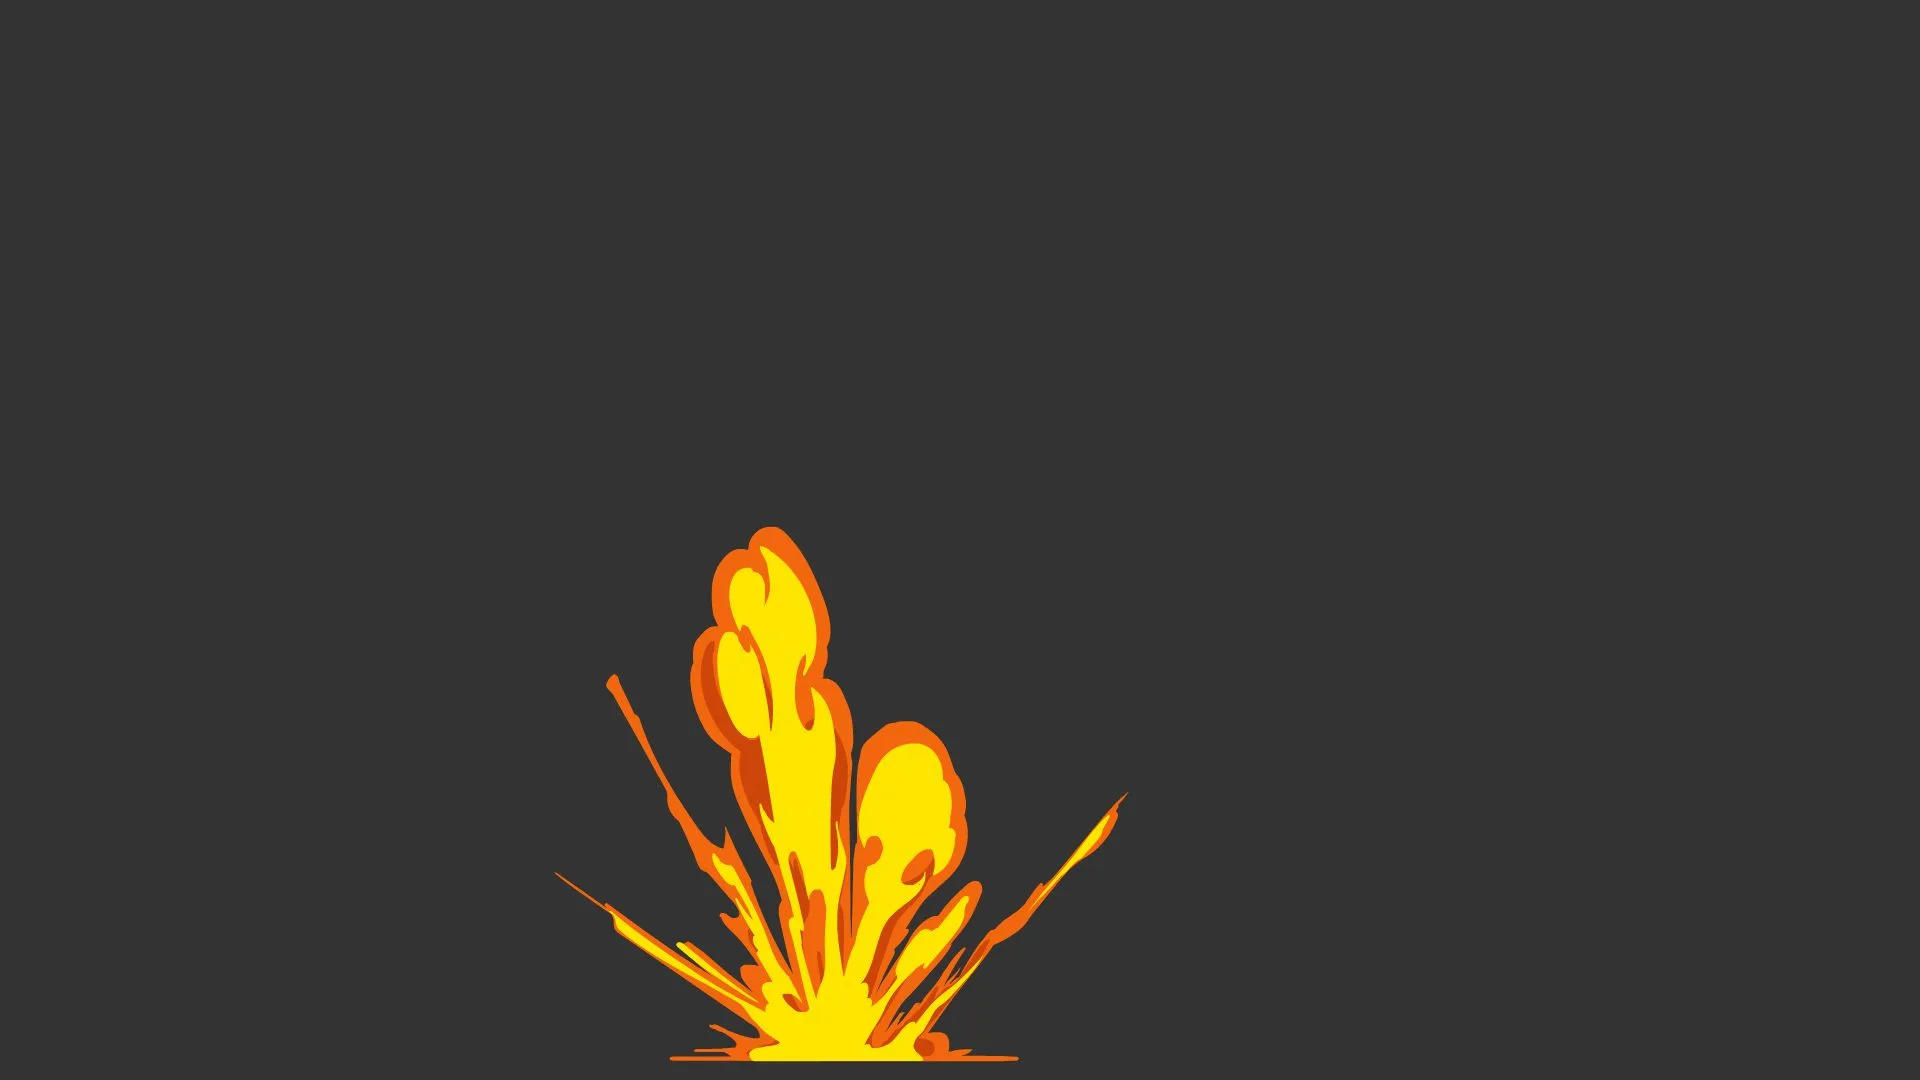 Explosion B 7.0 – Stylized 3D Effect